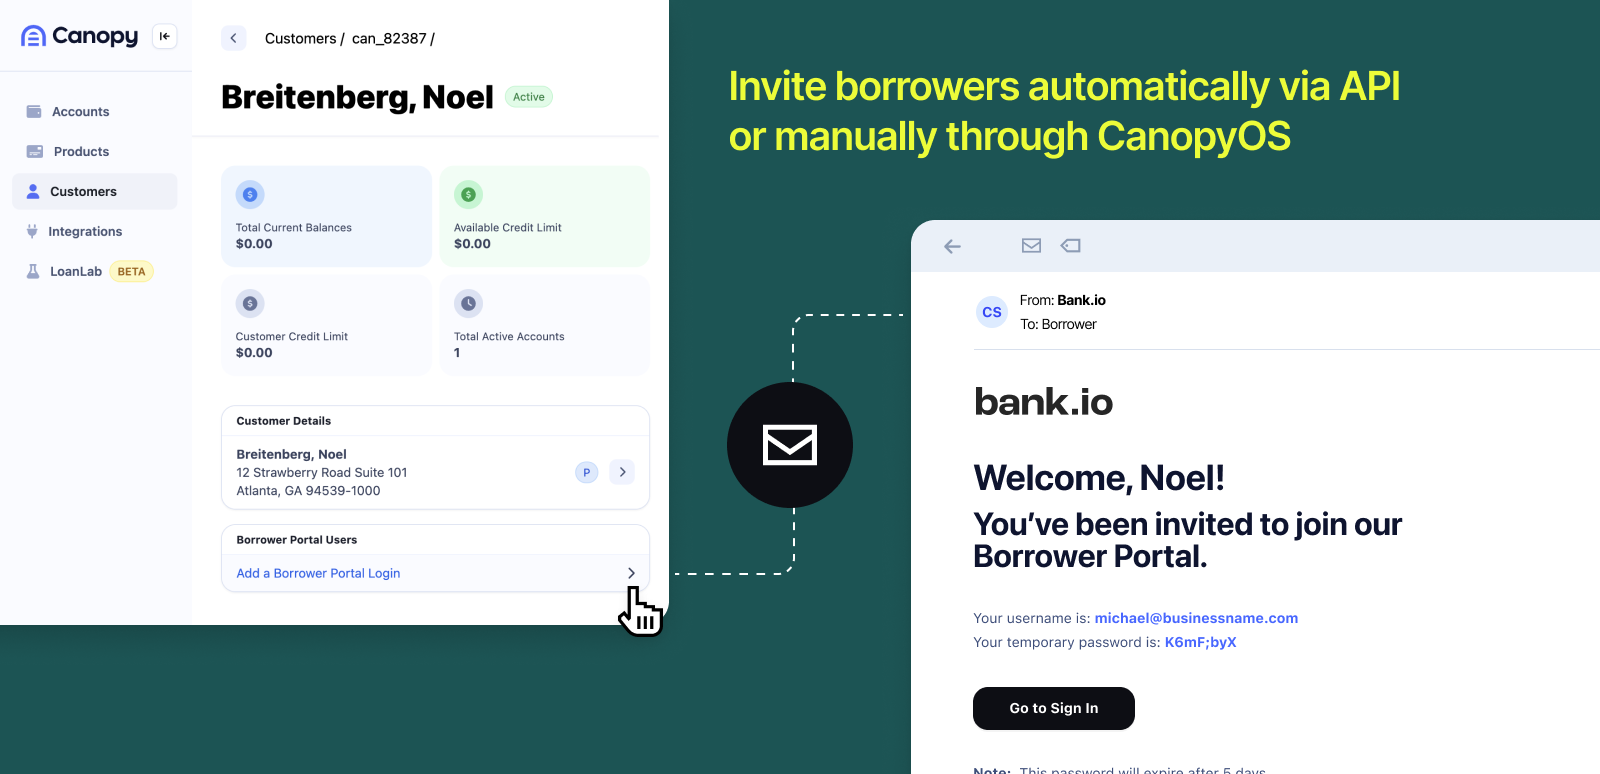 Borrower Portal Mail invitation